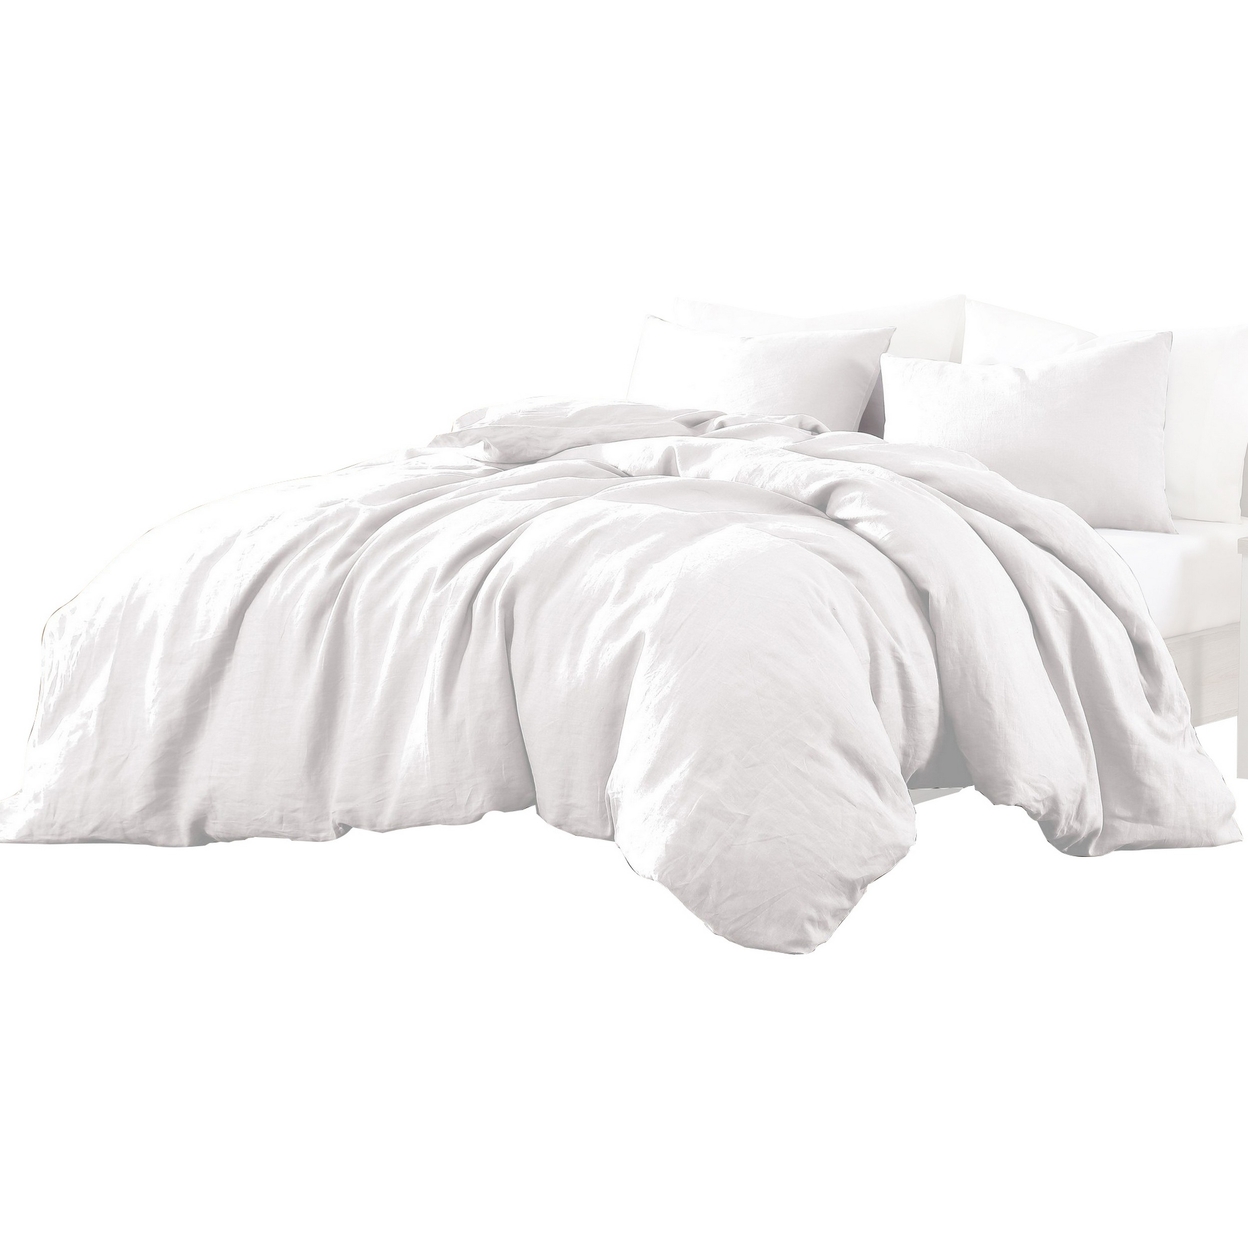 Edge 4 Piece Queen Size Duvet Comforter Set, Washed Linen, Clean White - Saltoro Sherpi